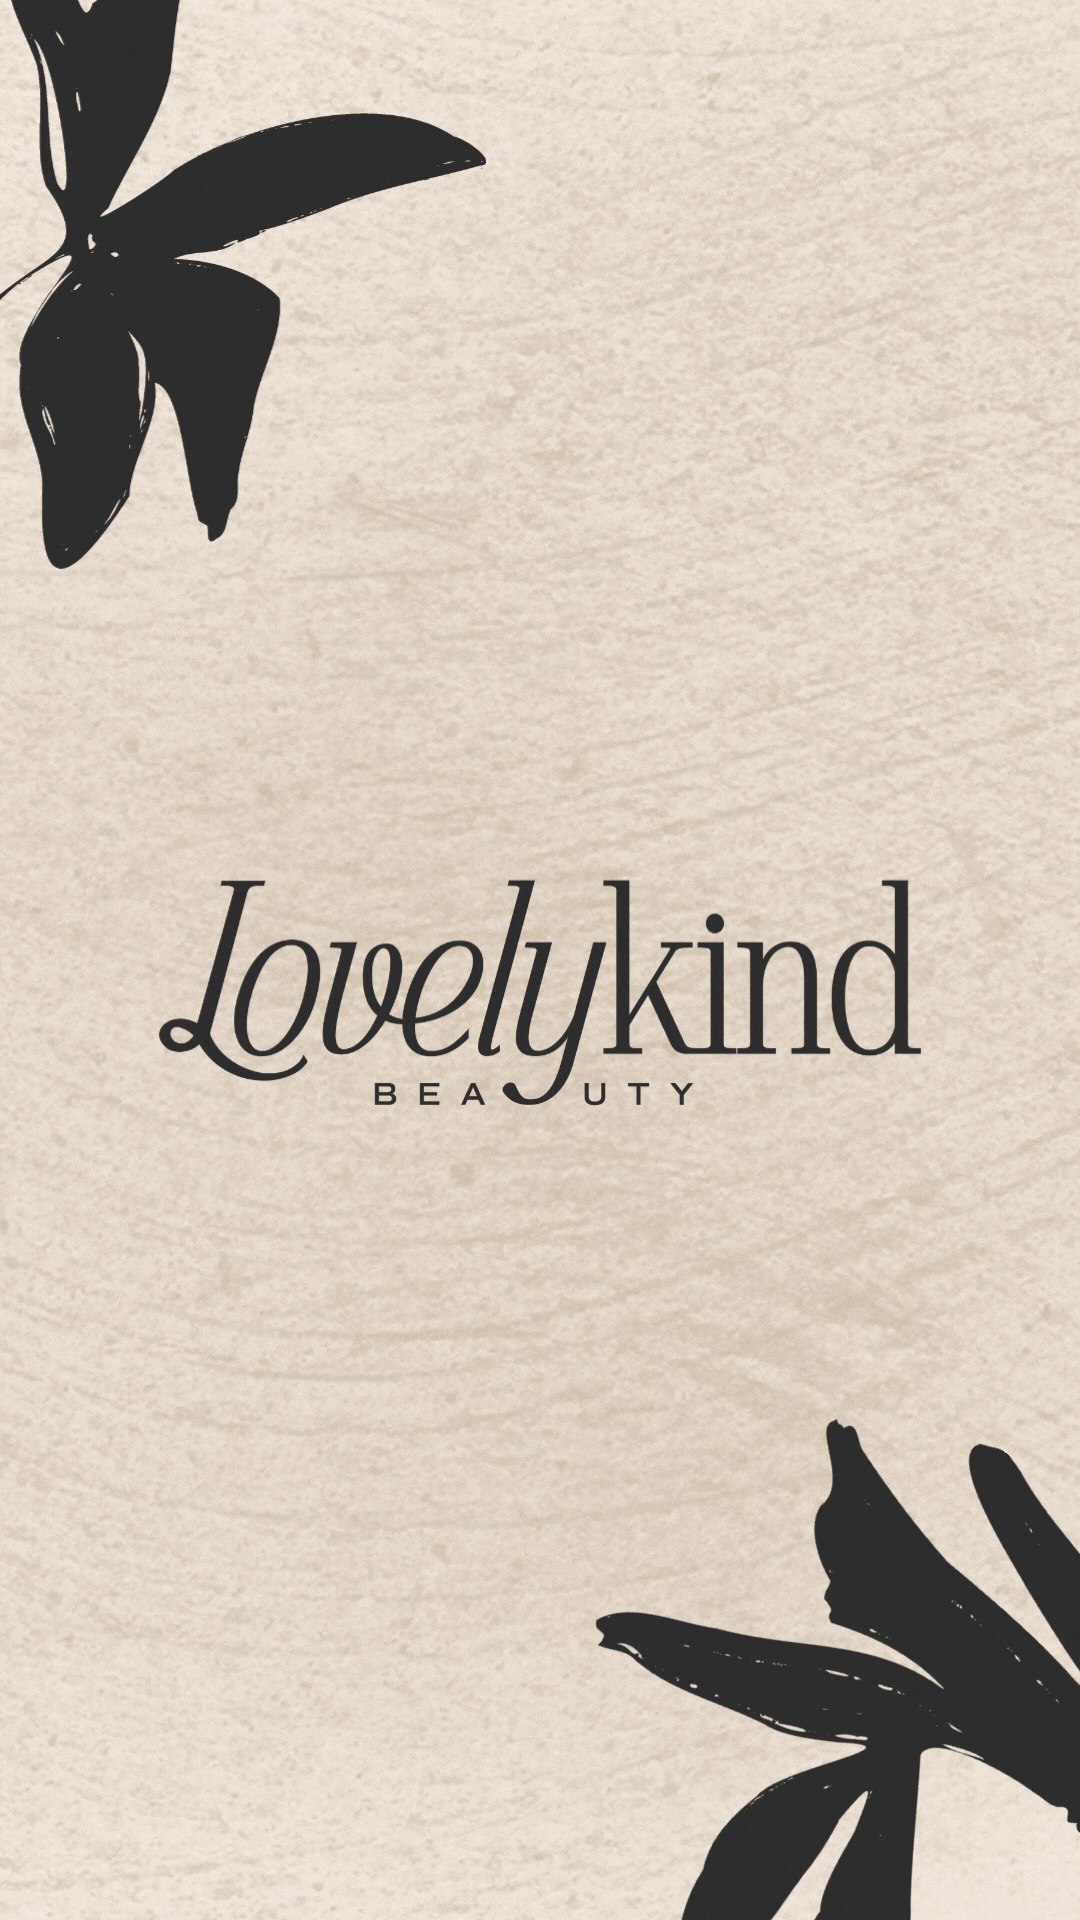 Lovelykind brand launch video